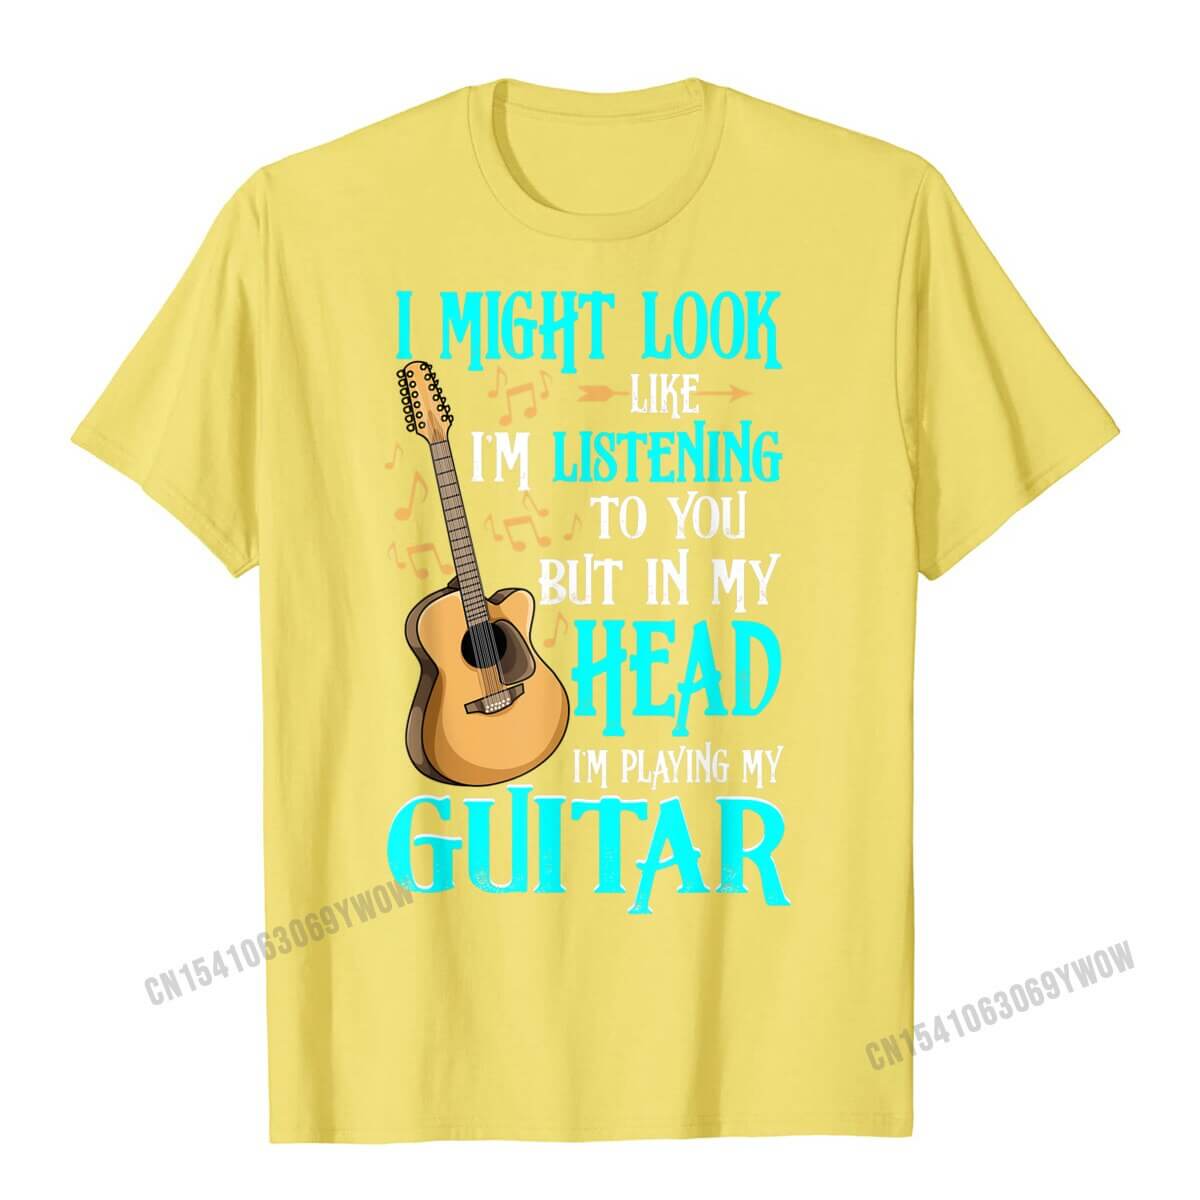 Unique and funny guitar print t-shirt Yellow guitarmetrics